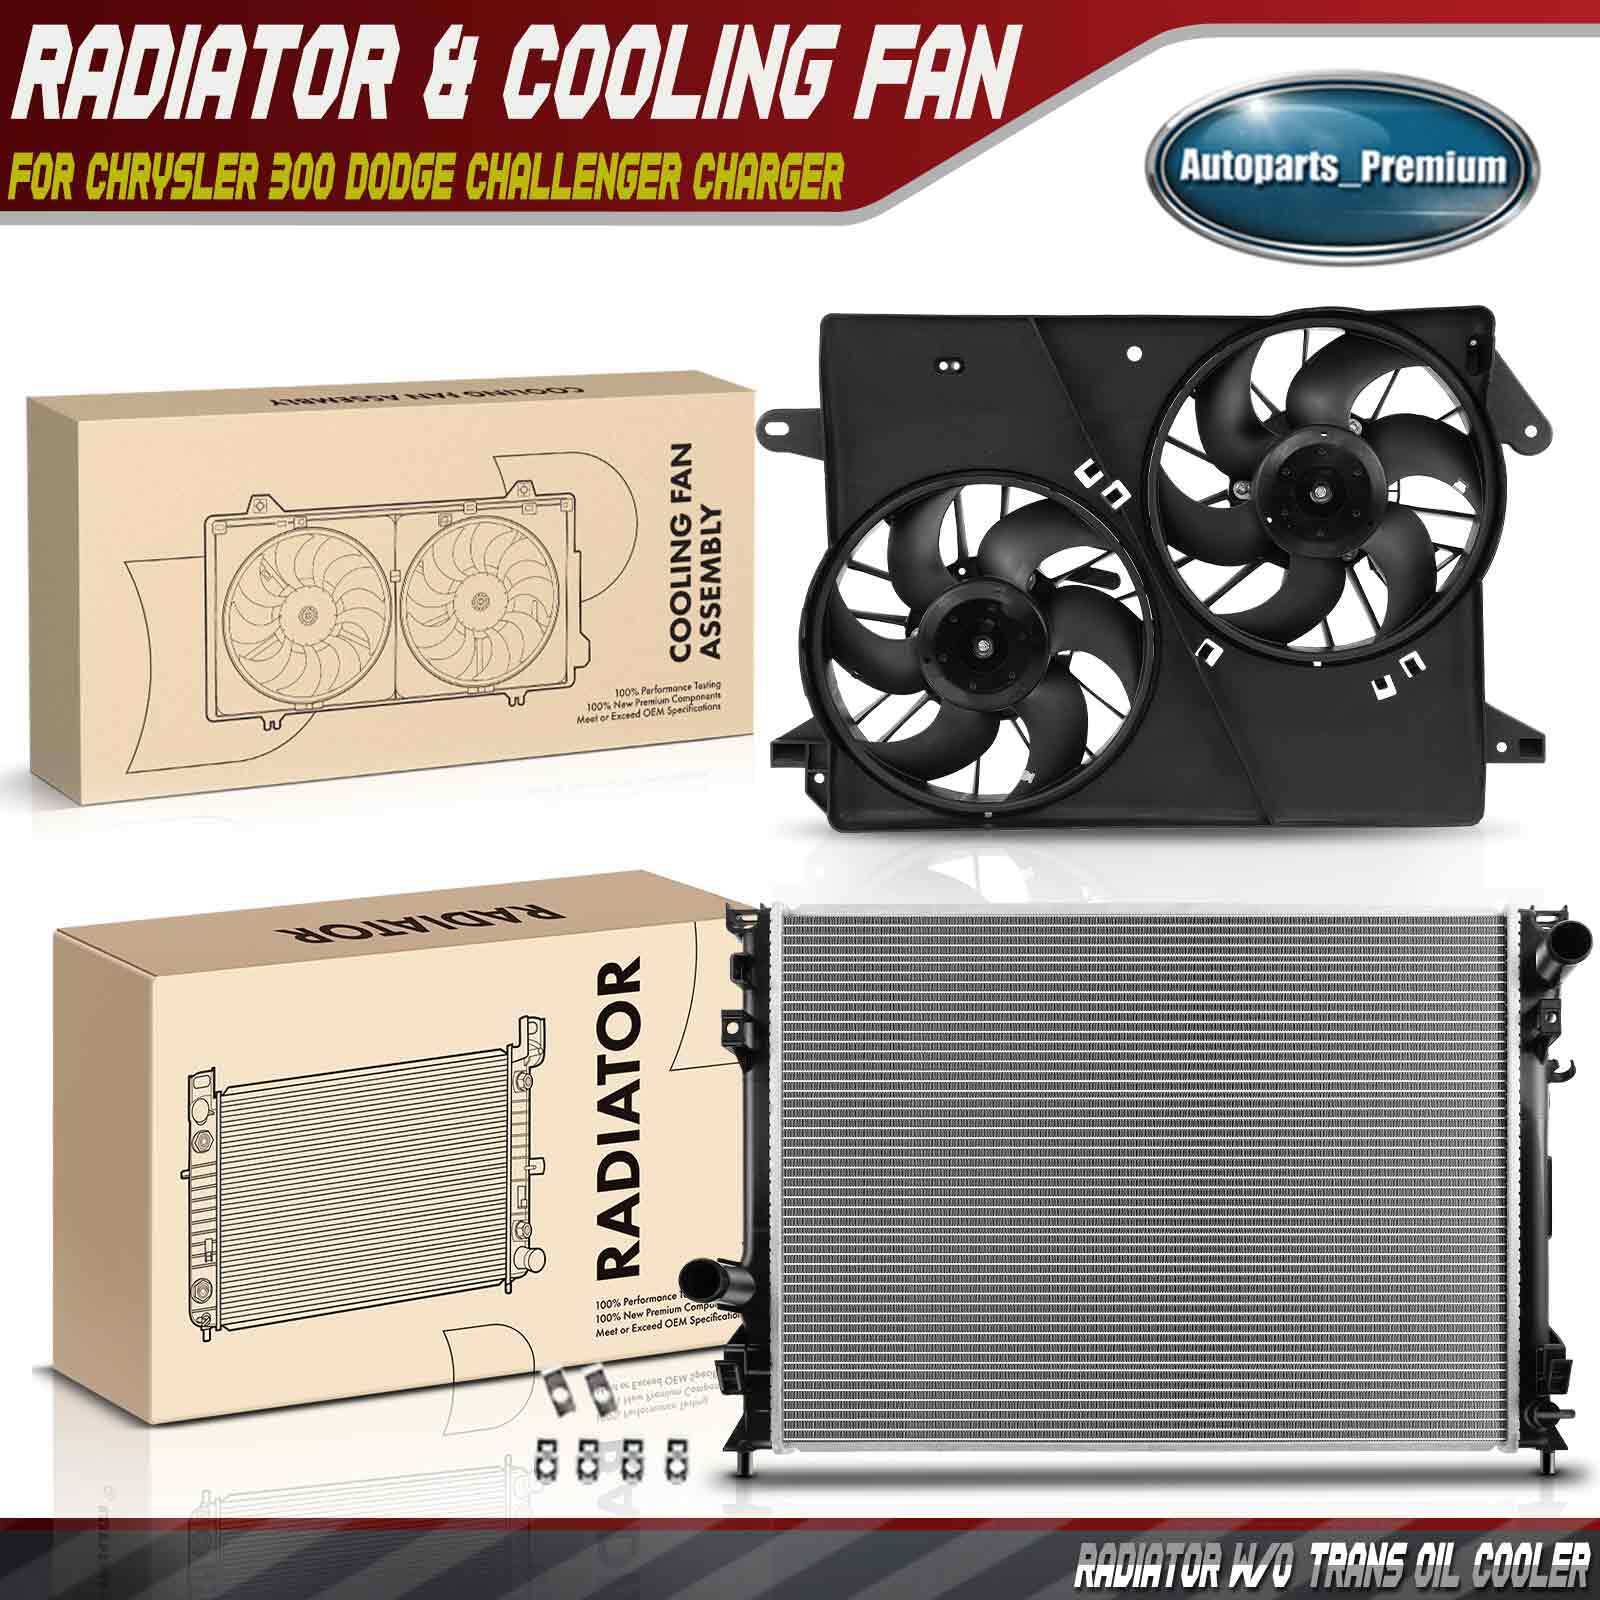 Radiator & Cooling Fan Assembly Kit for Chrysler 300 Dodge Challenger Charger